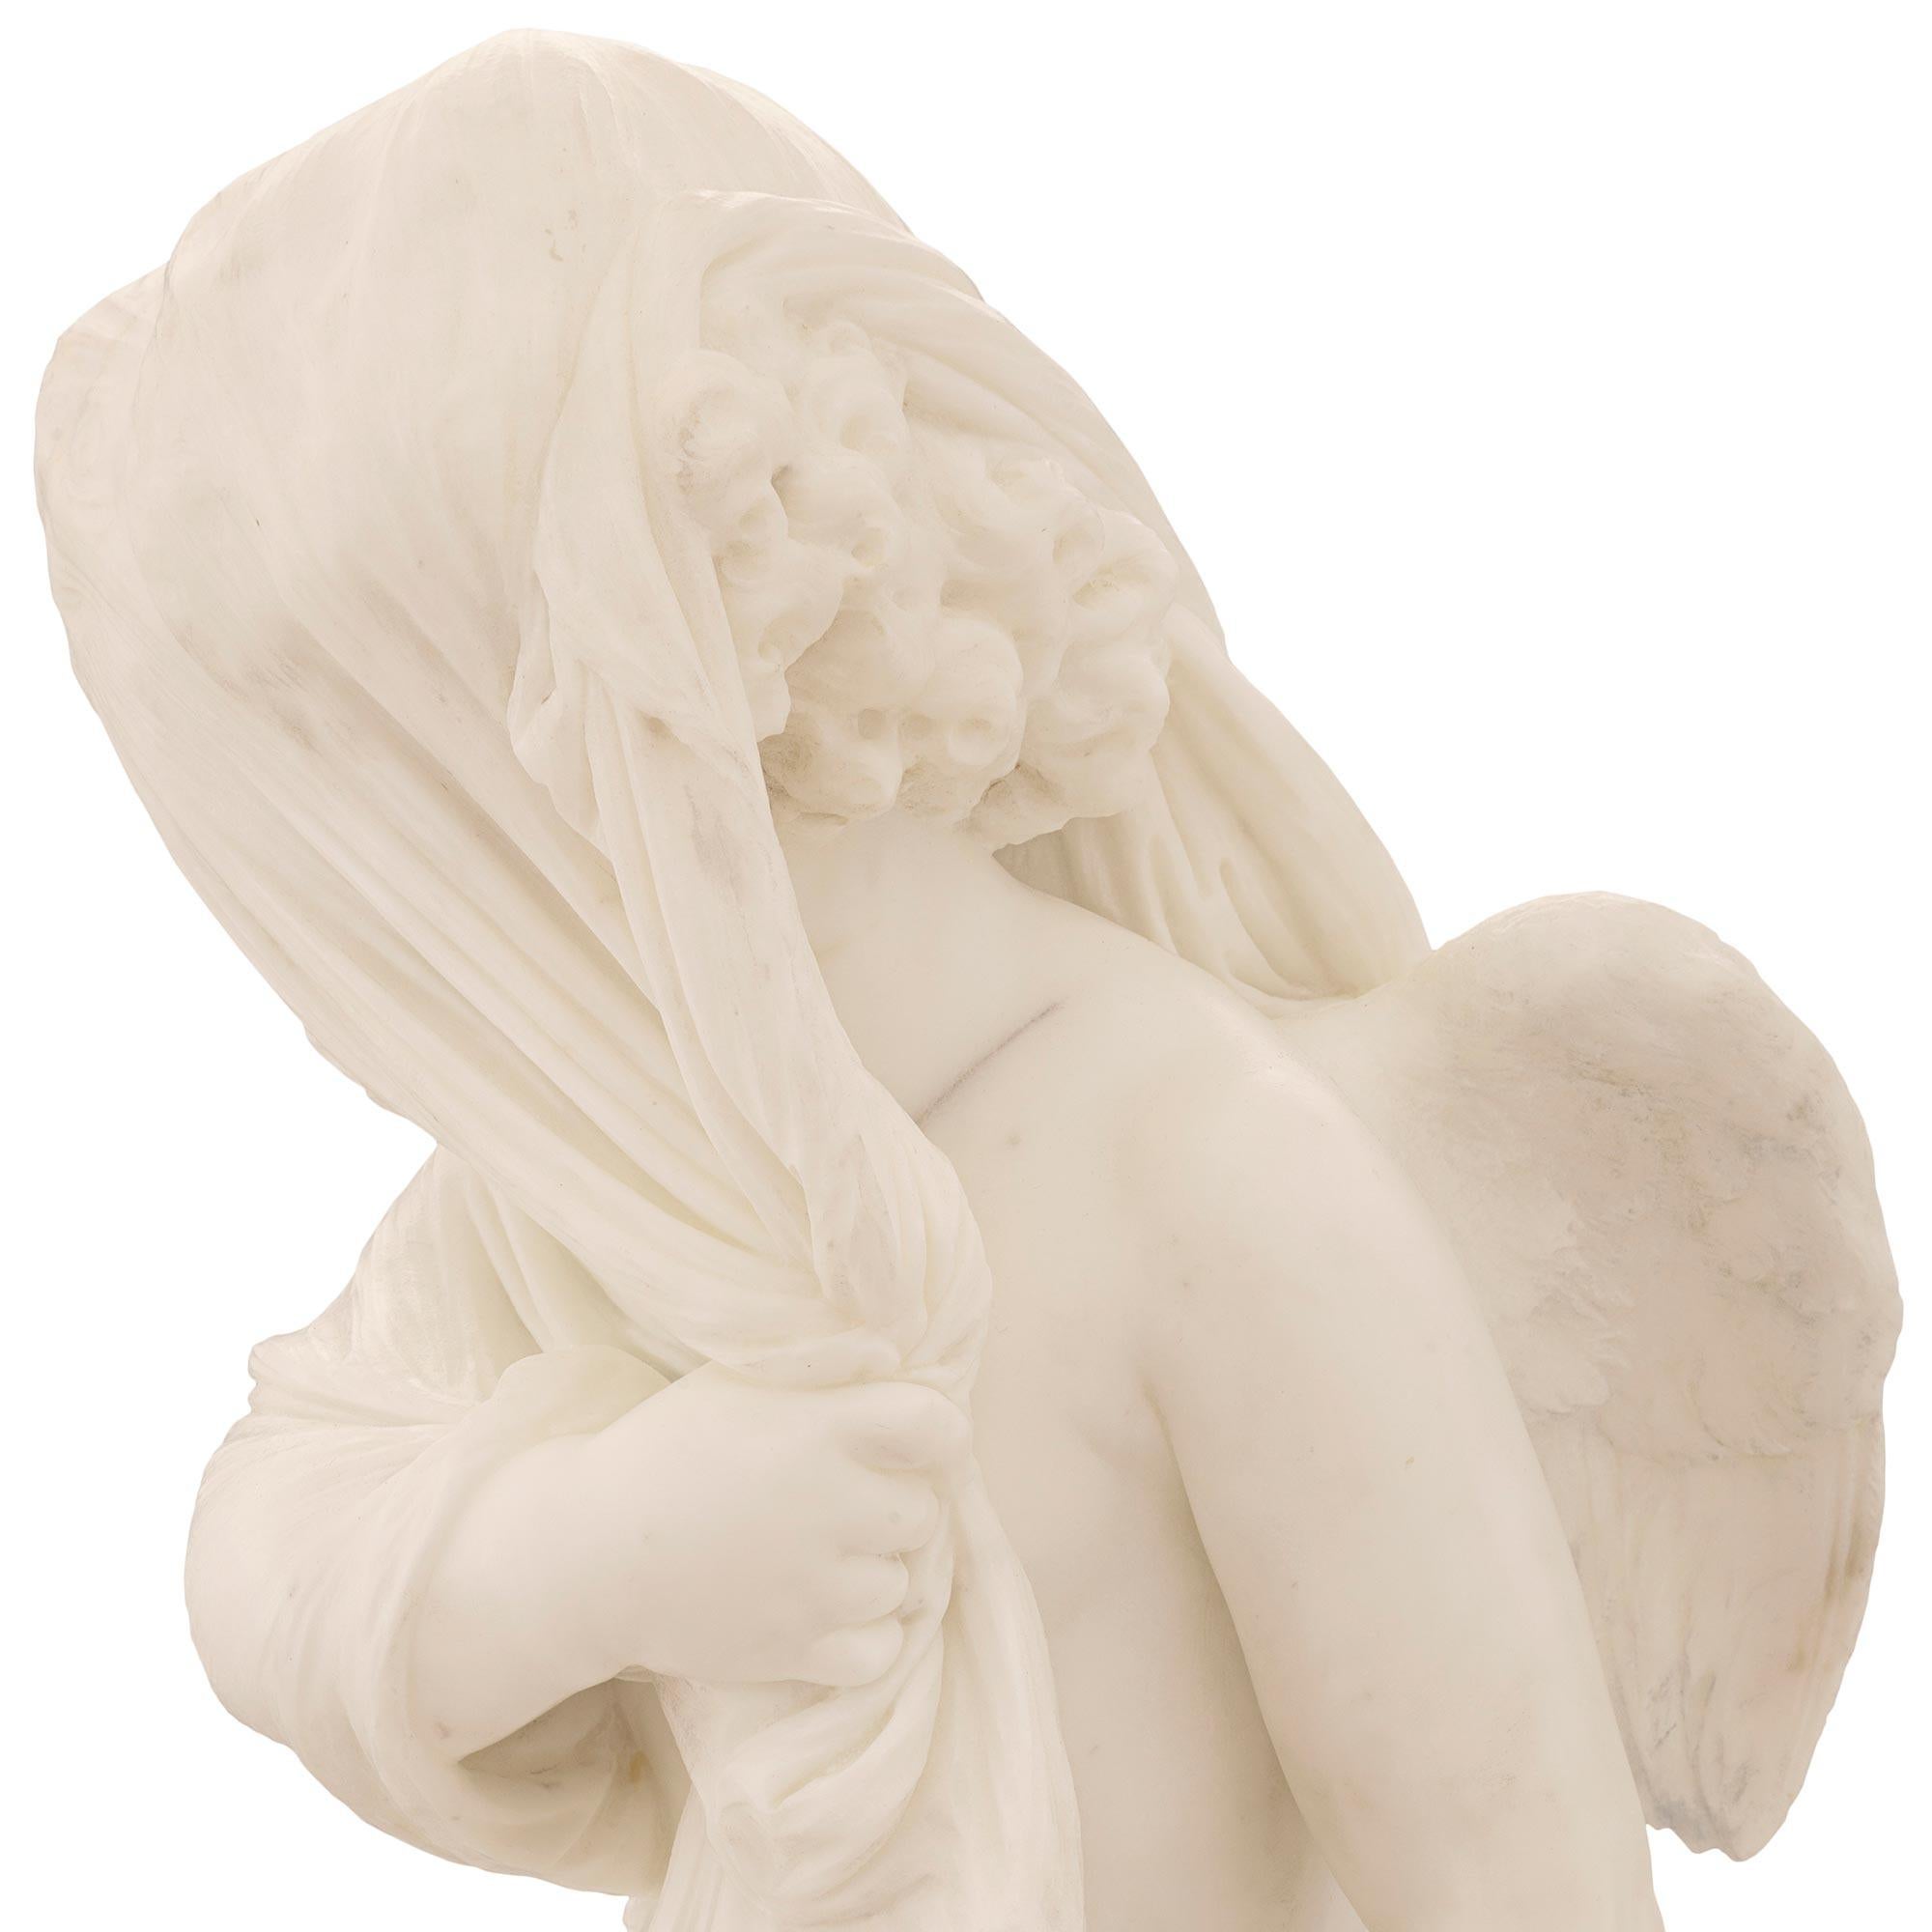 Italian 19th Century White Carrara Marble Statue On Its Original Pedestal  For Sale 6